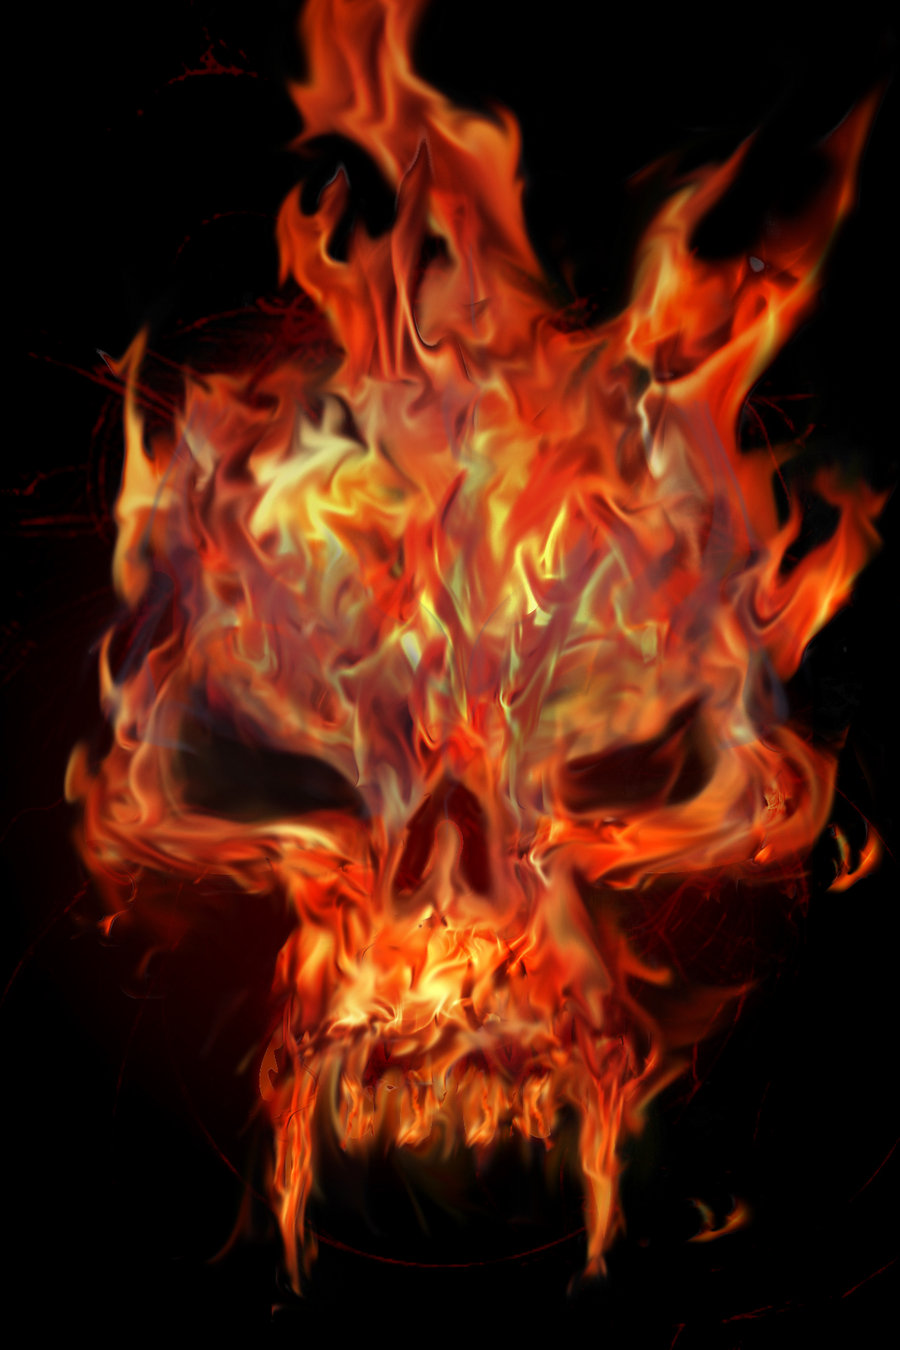 fond d'écran crâne enflammé,flamme,feu,chaleur,orange,feu